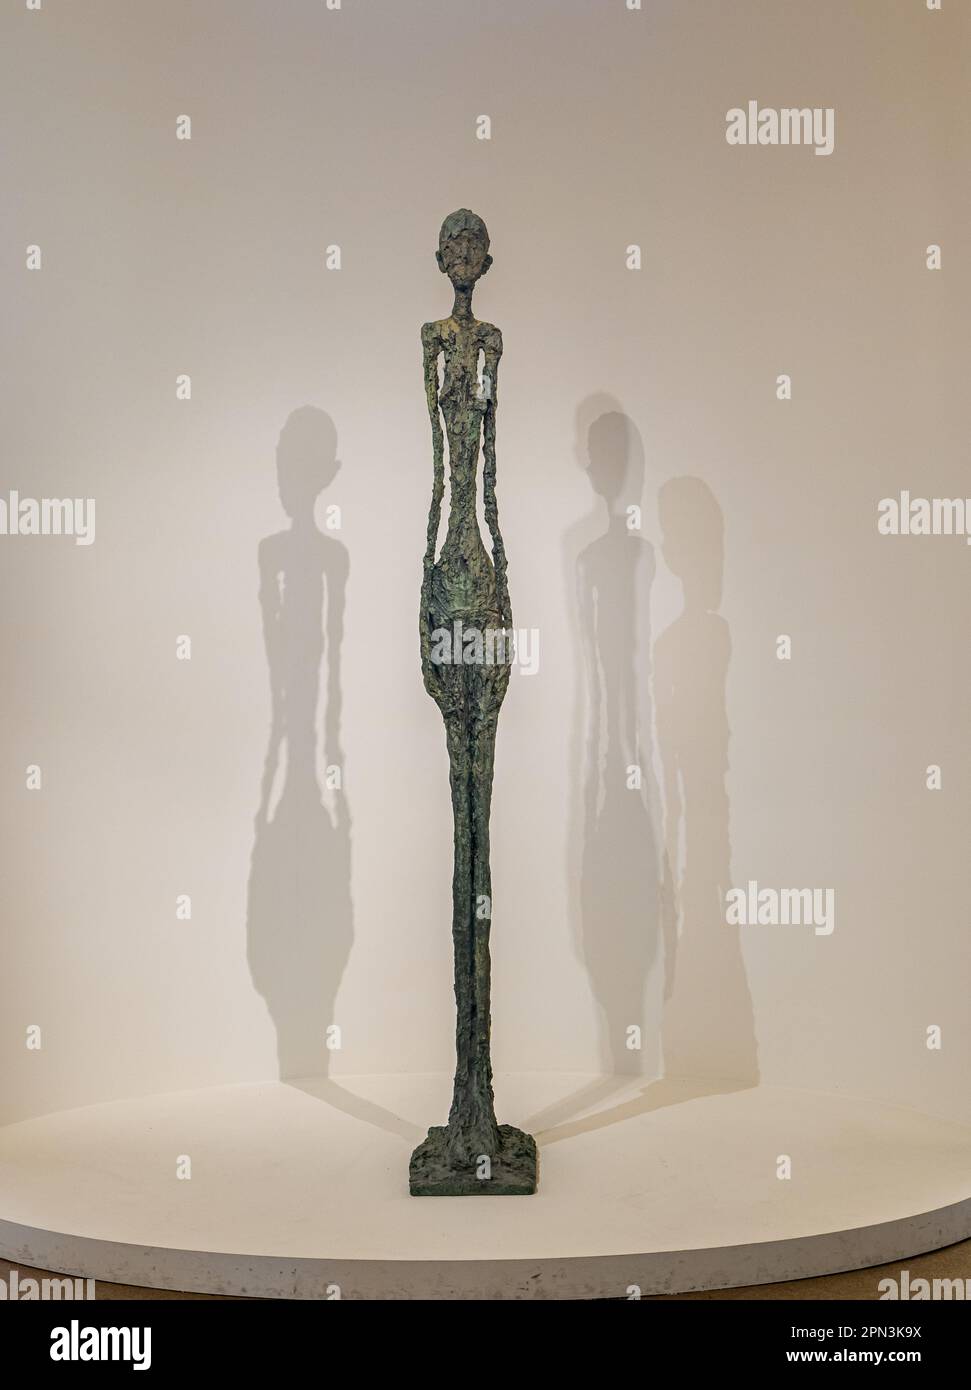 Magnani Palace, Reggio Emilia region, italy - exhibition 'the restless art' - Alberto Giacometti (1901-1966) -  sculpture ' Femme debout' Stock Photo